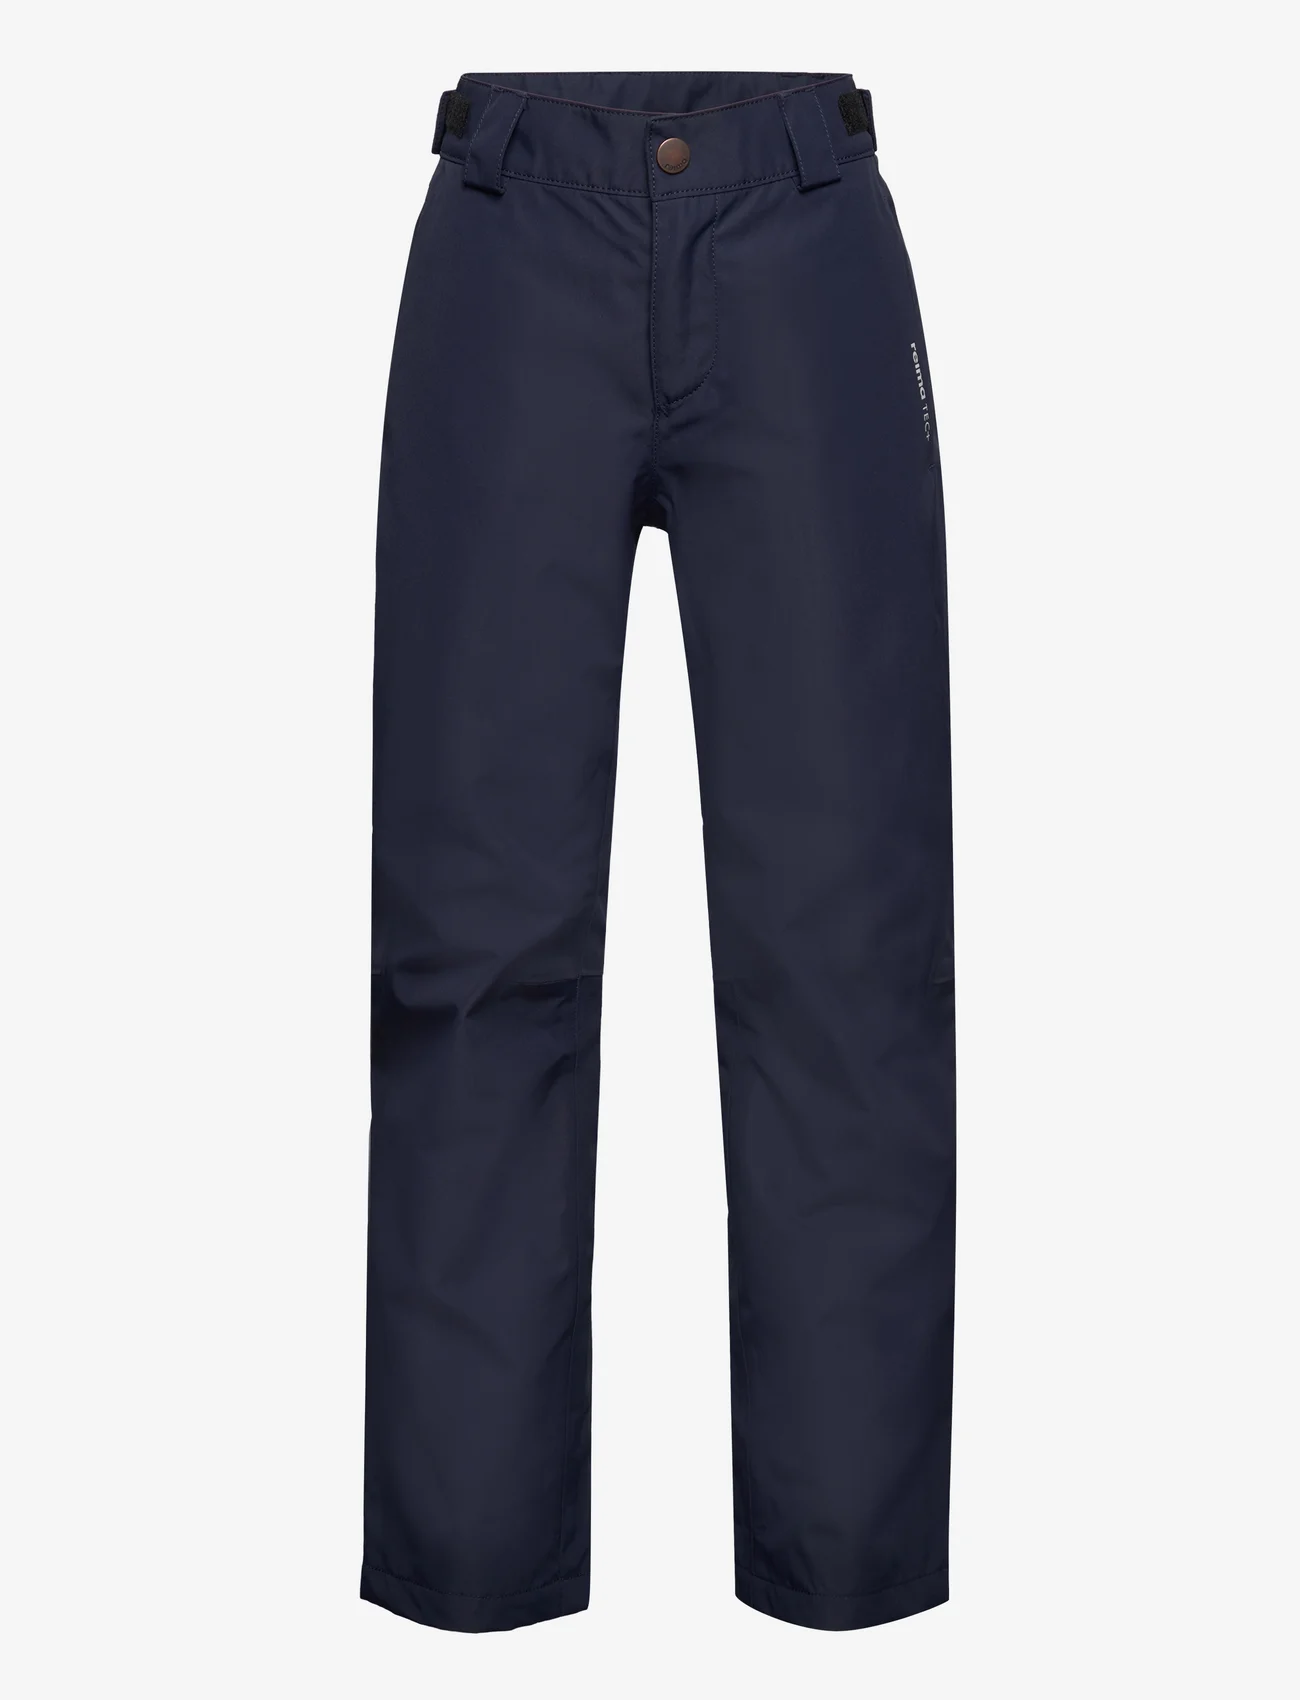 Reima - Reimatec pants, Kierto - outdoor pants - navy - 0